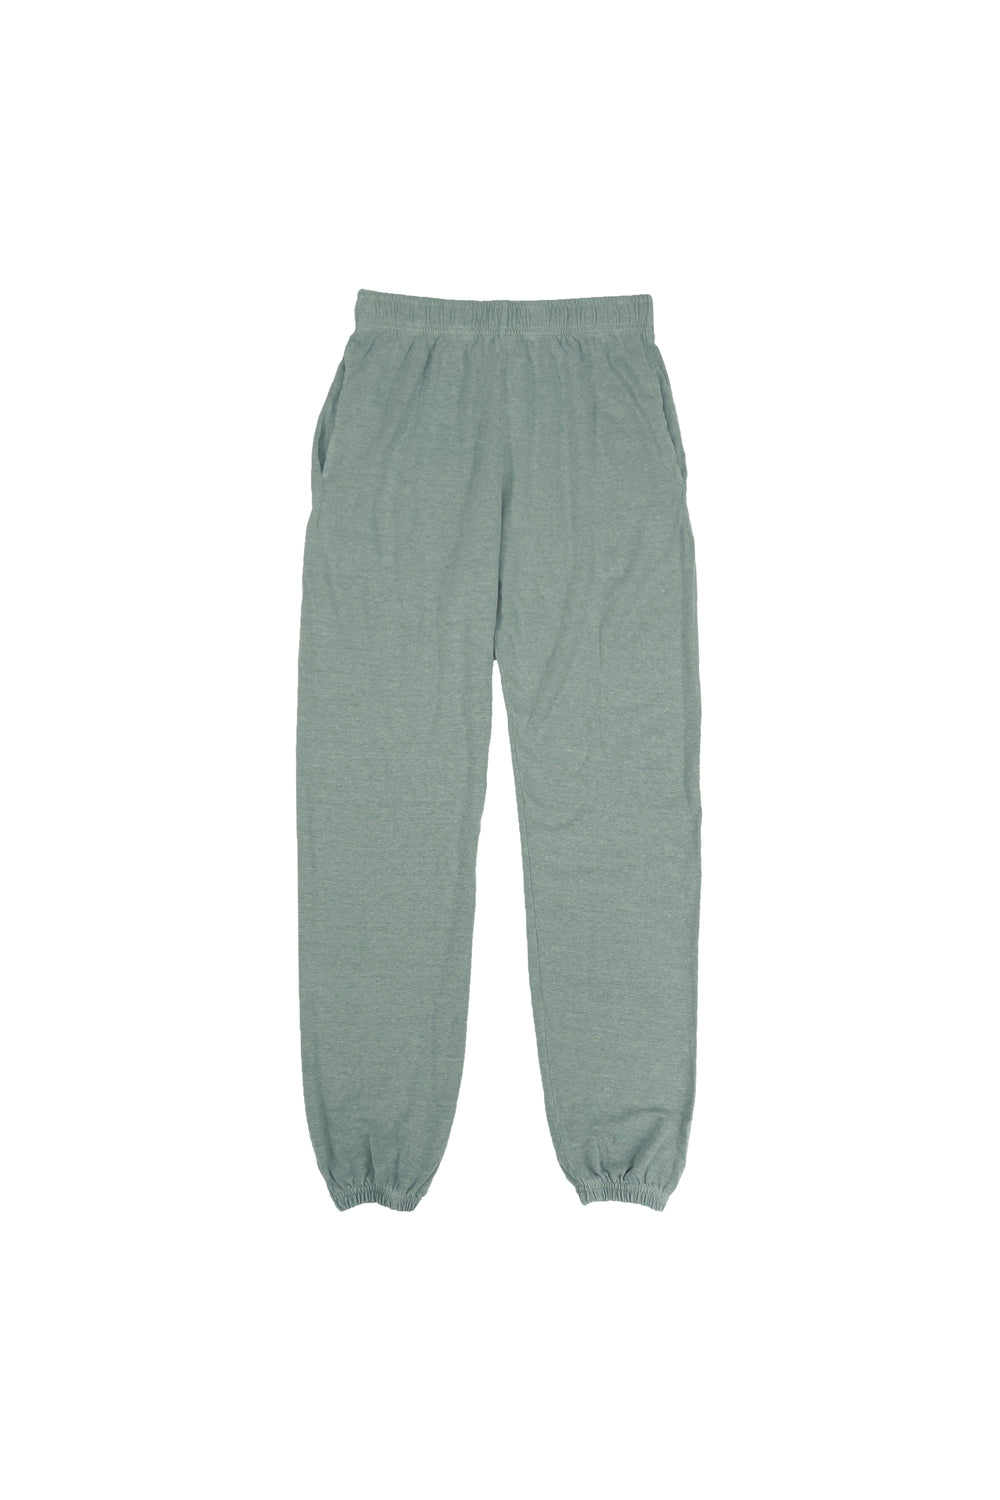 Alaska Hemp Wool Sweatpant | Jungmaven Hemp Clothing & Accessories / Color: Clay Green